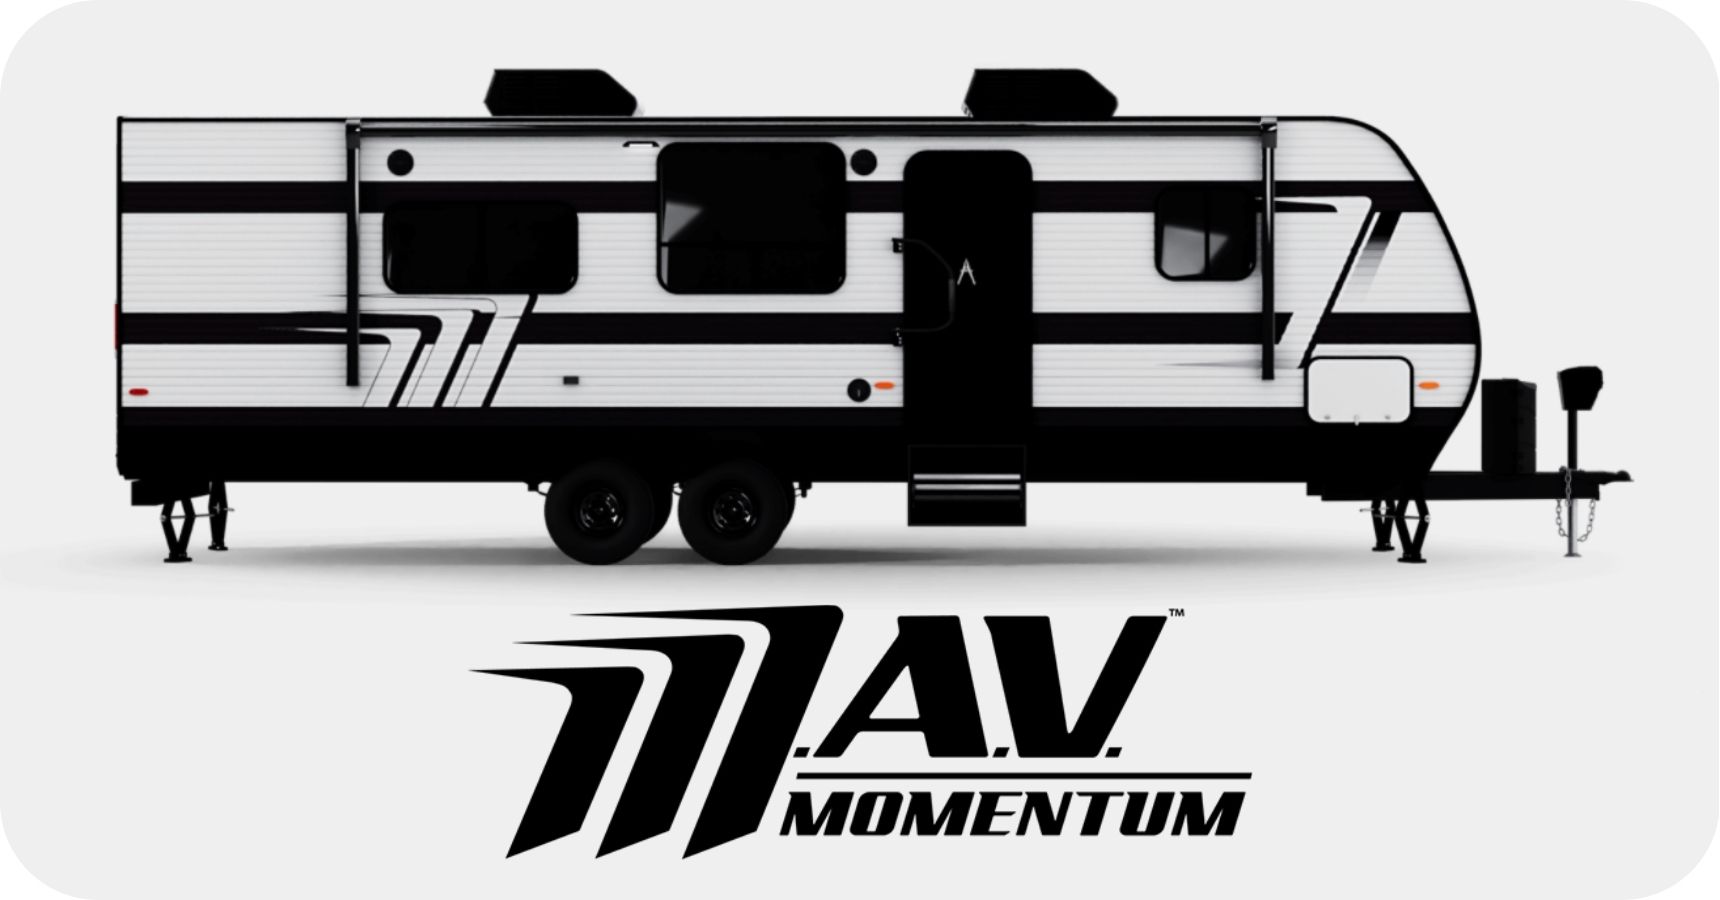 Grand Design Momentum MAV